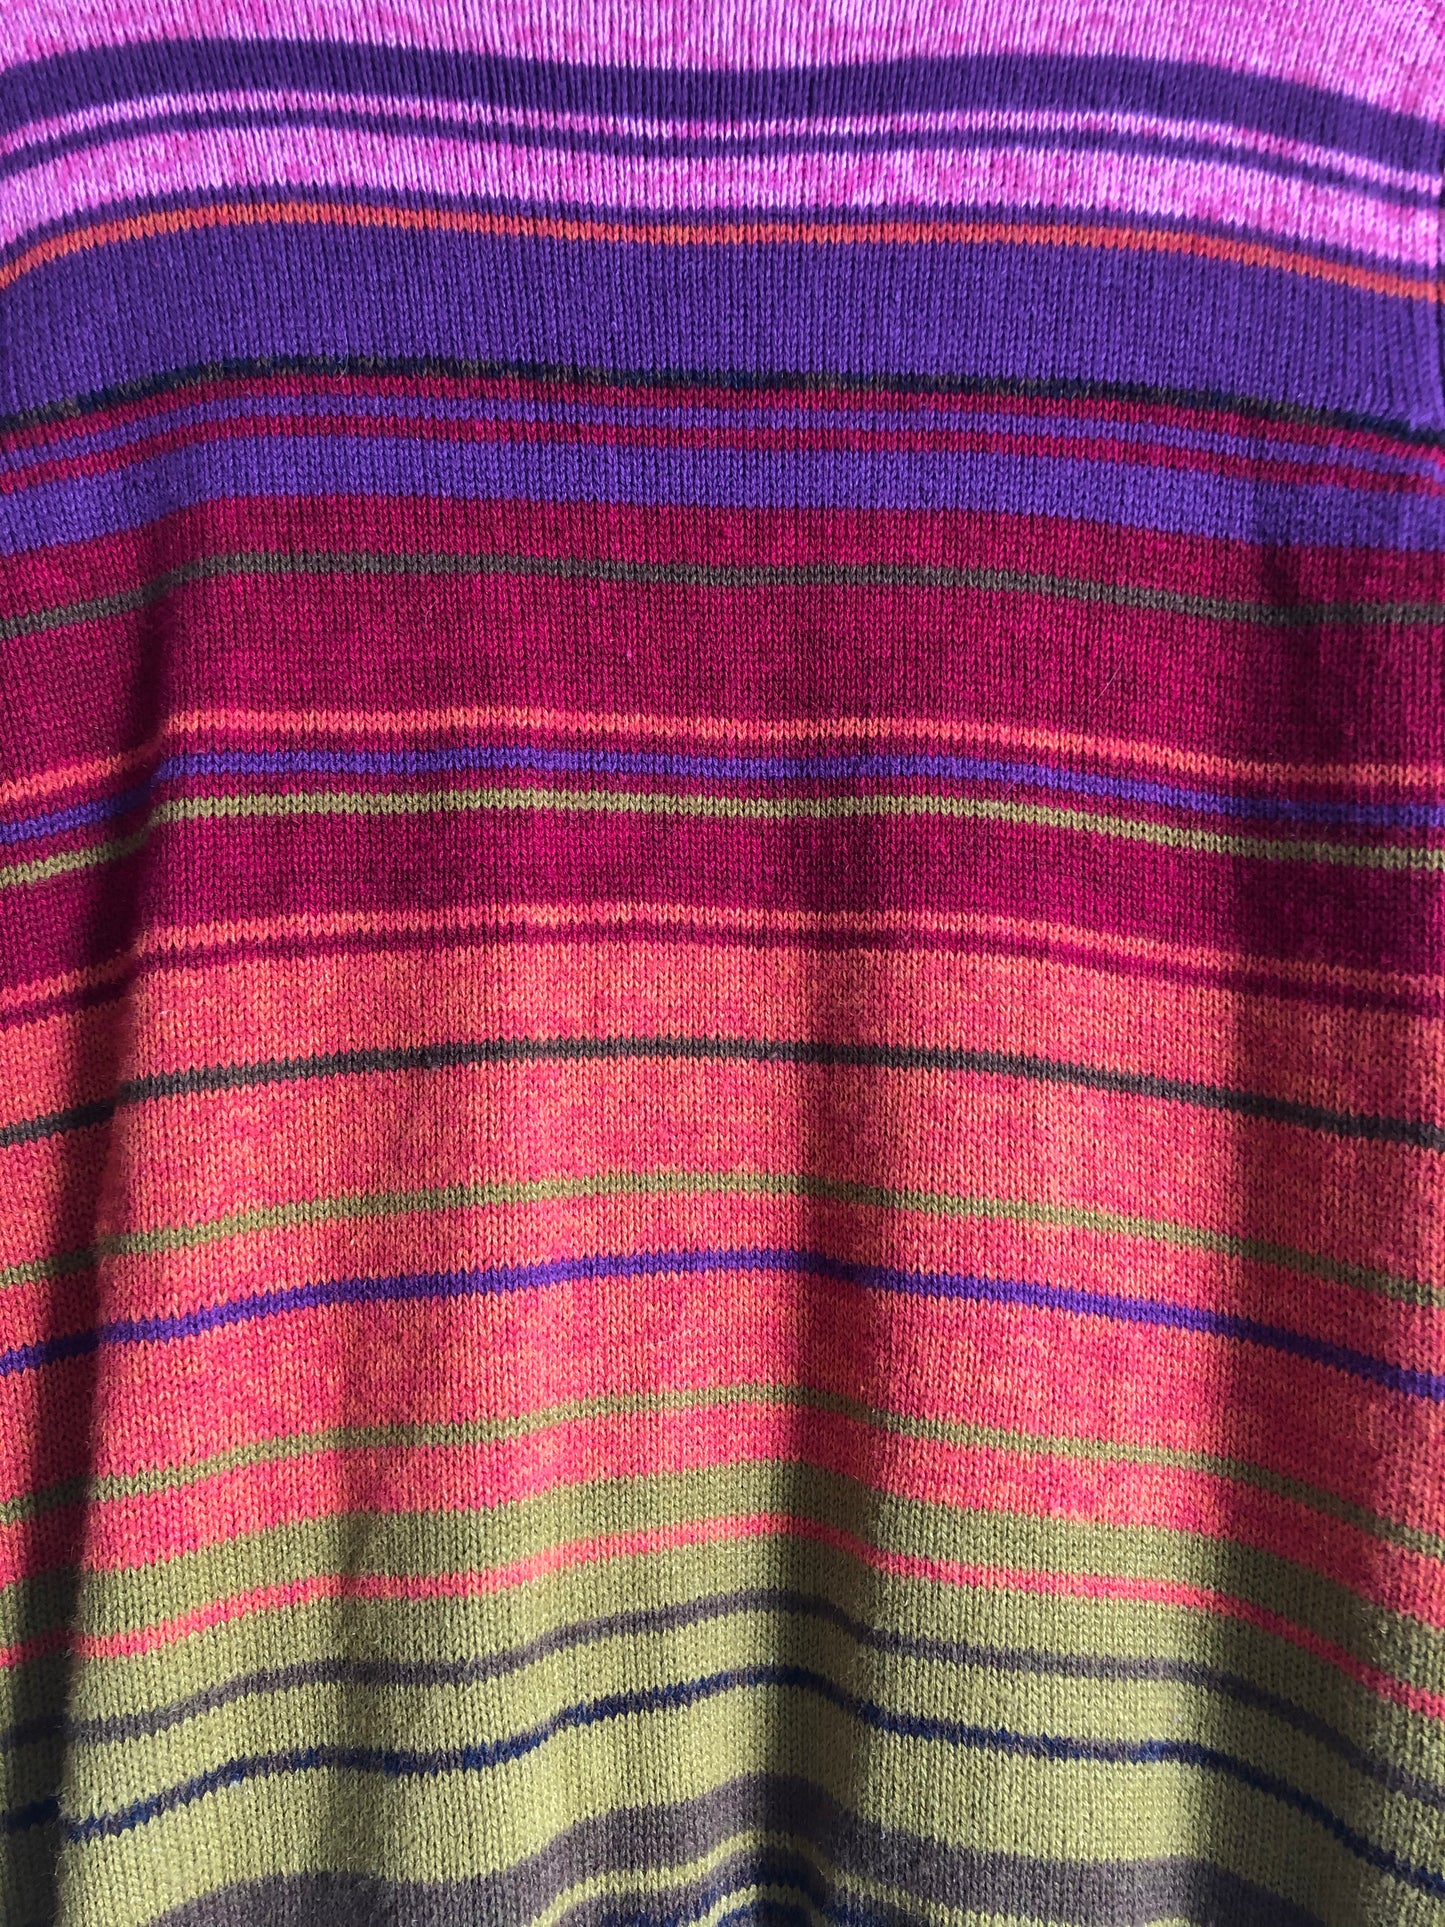 Vintage Colors Sweater